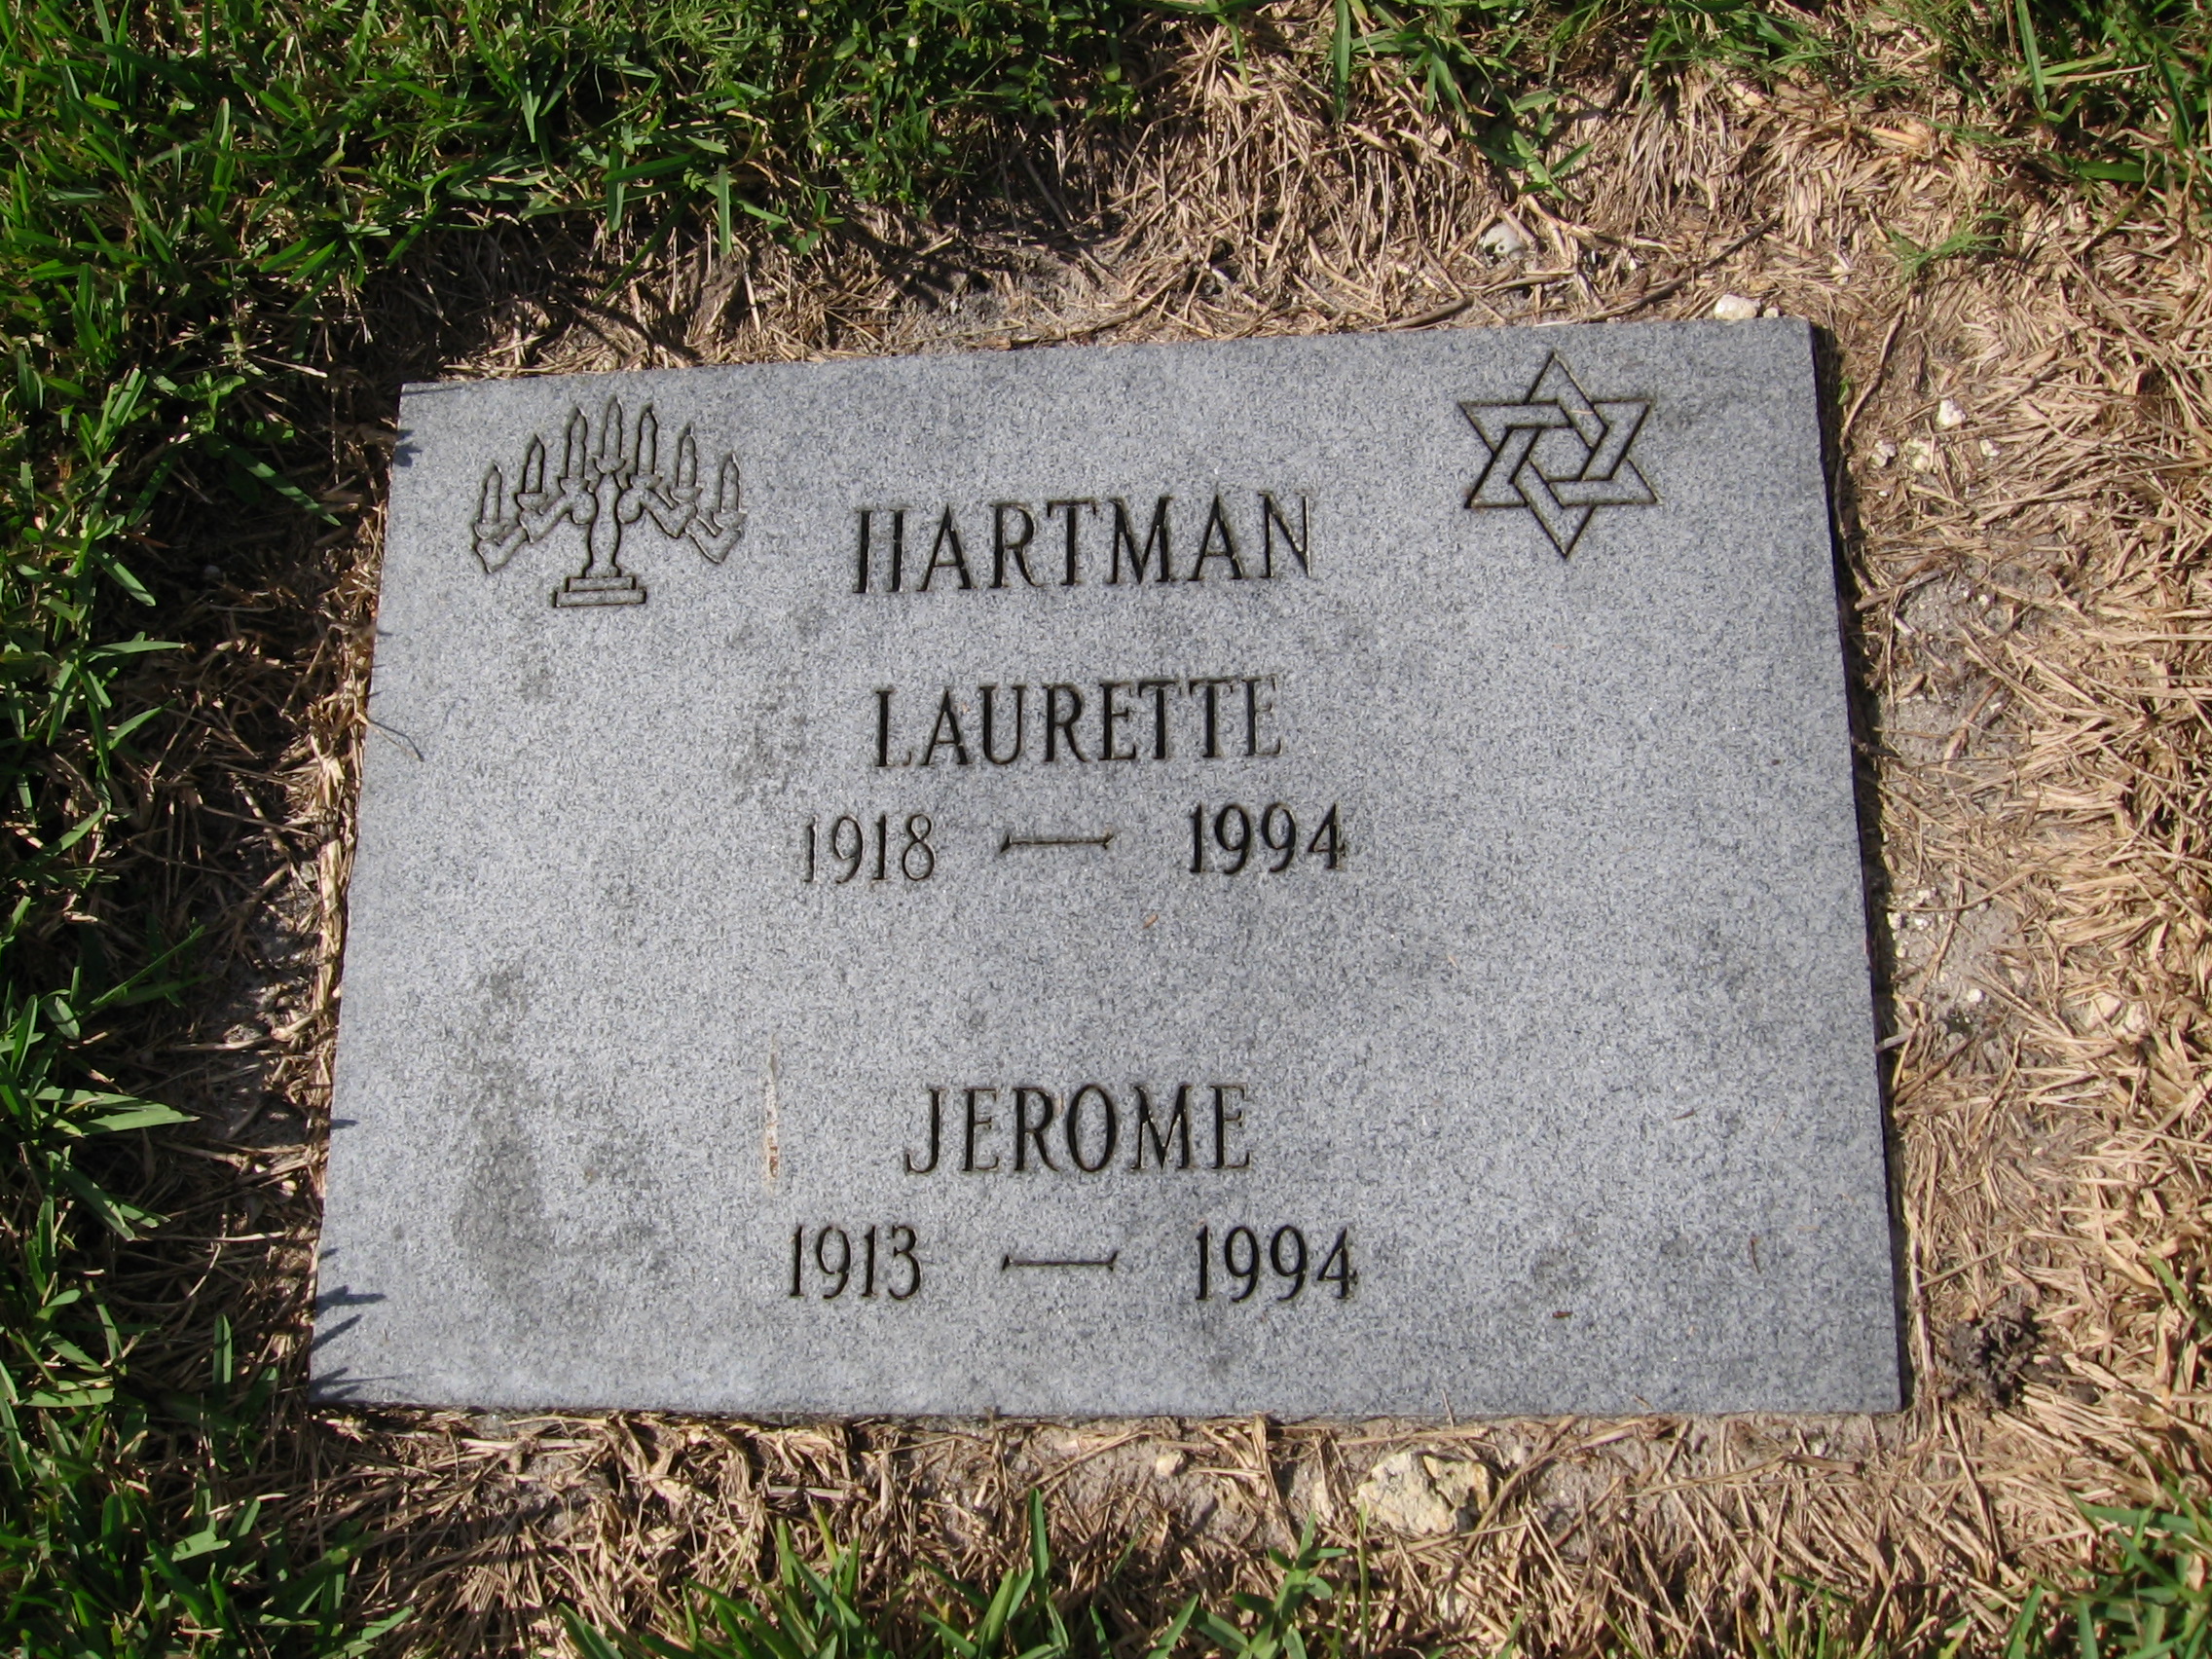 Jerome Hartman